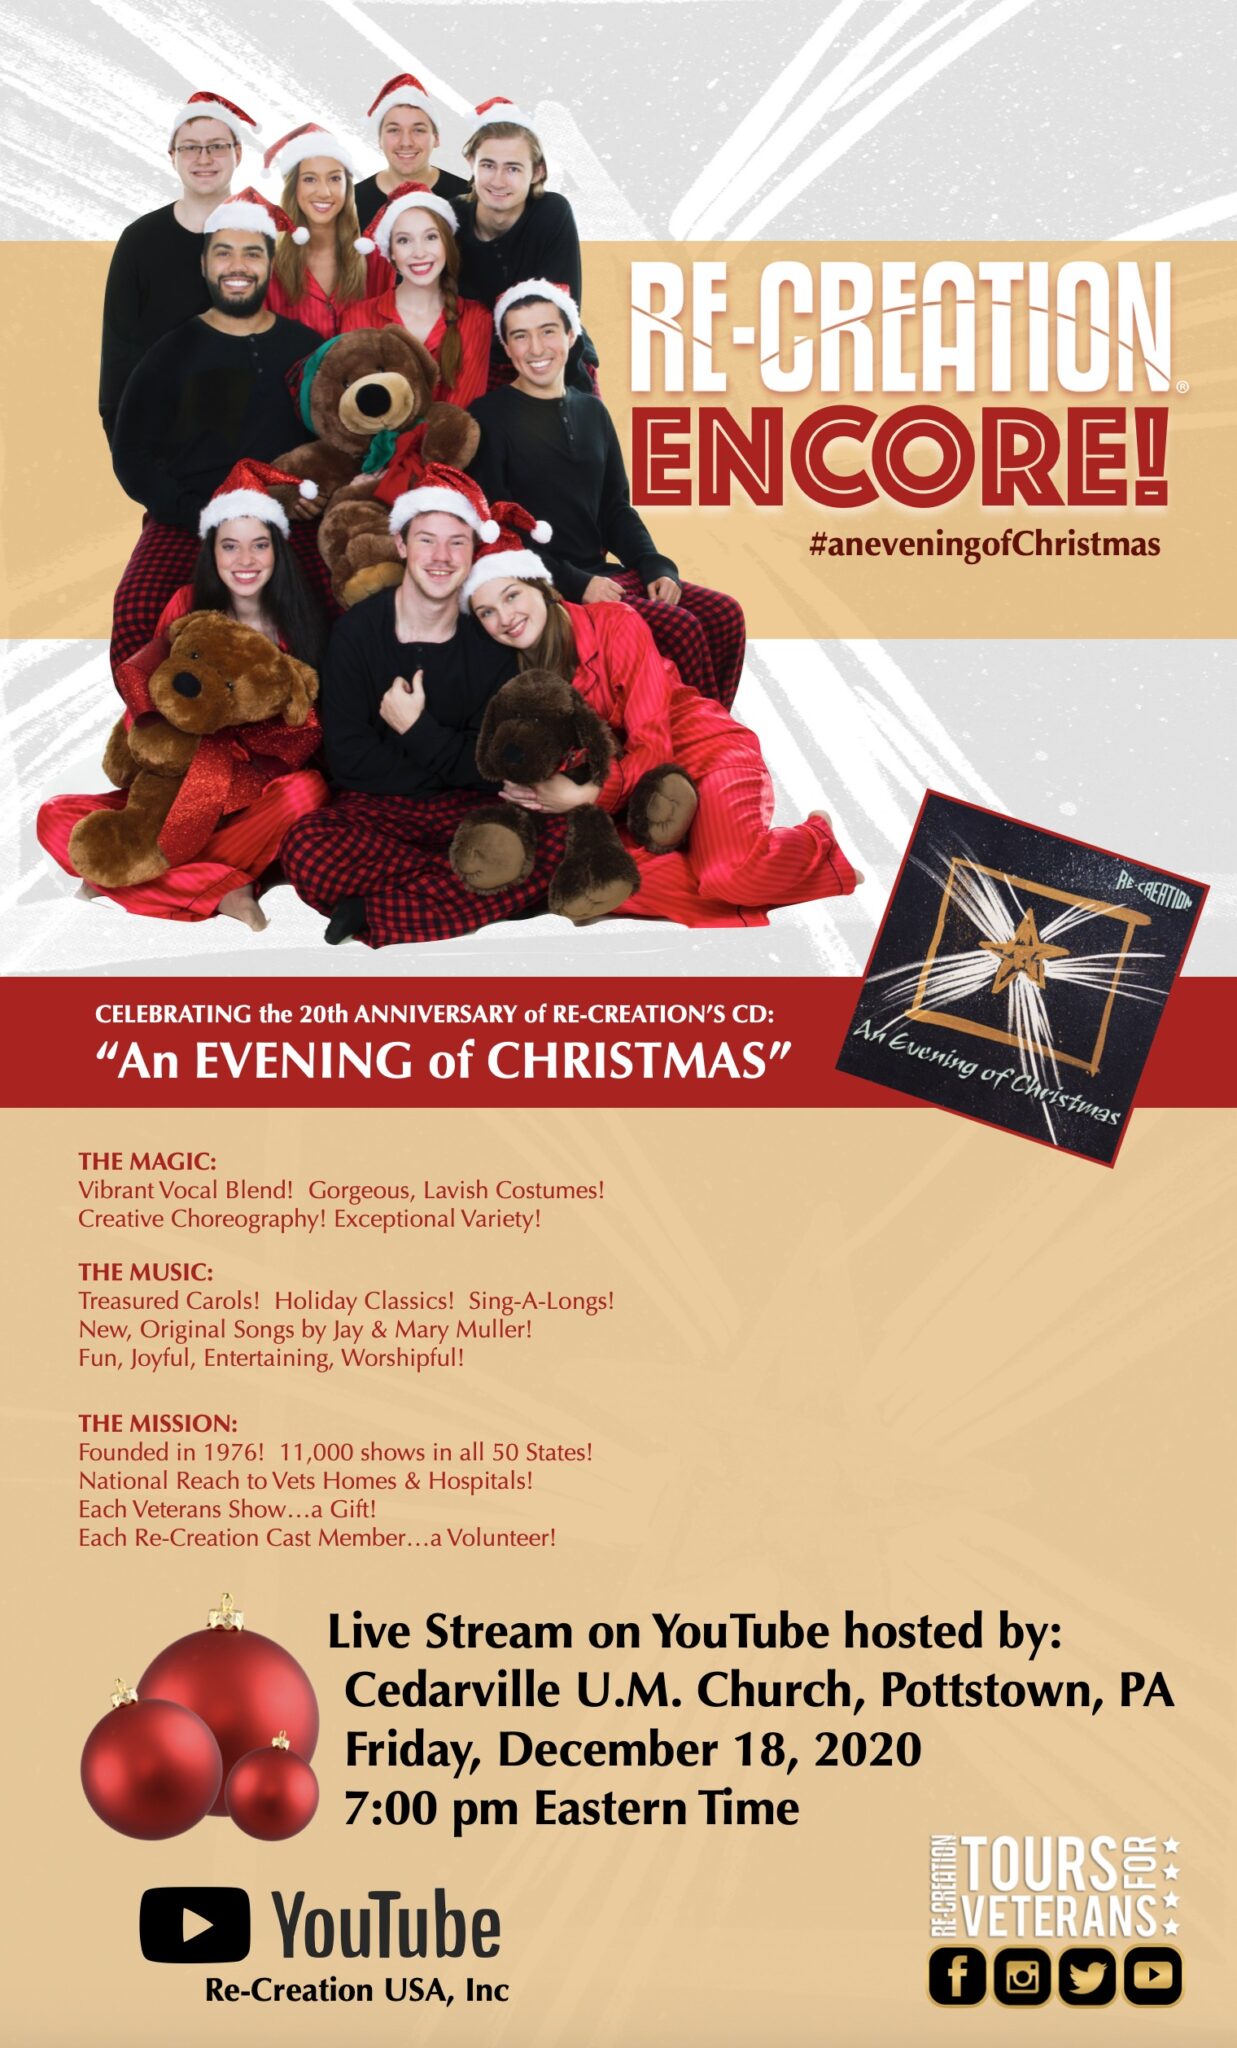 ReCreation Encore! An Evening of Christmas Online Concert